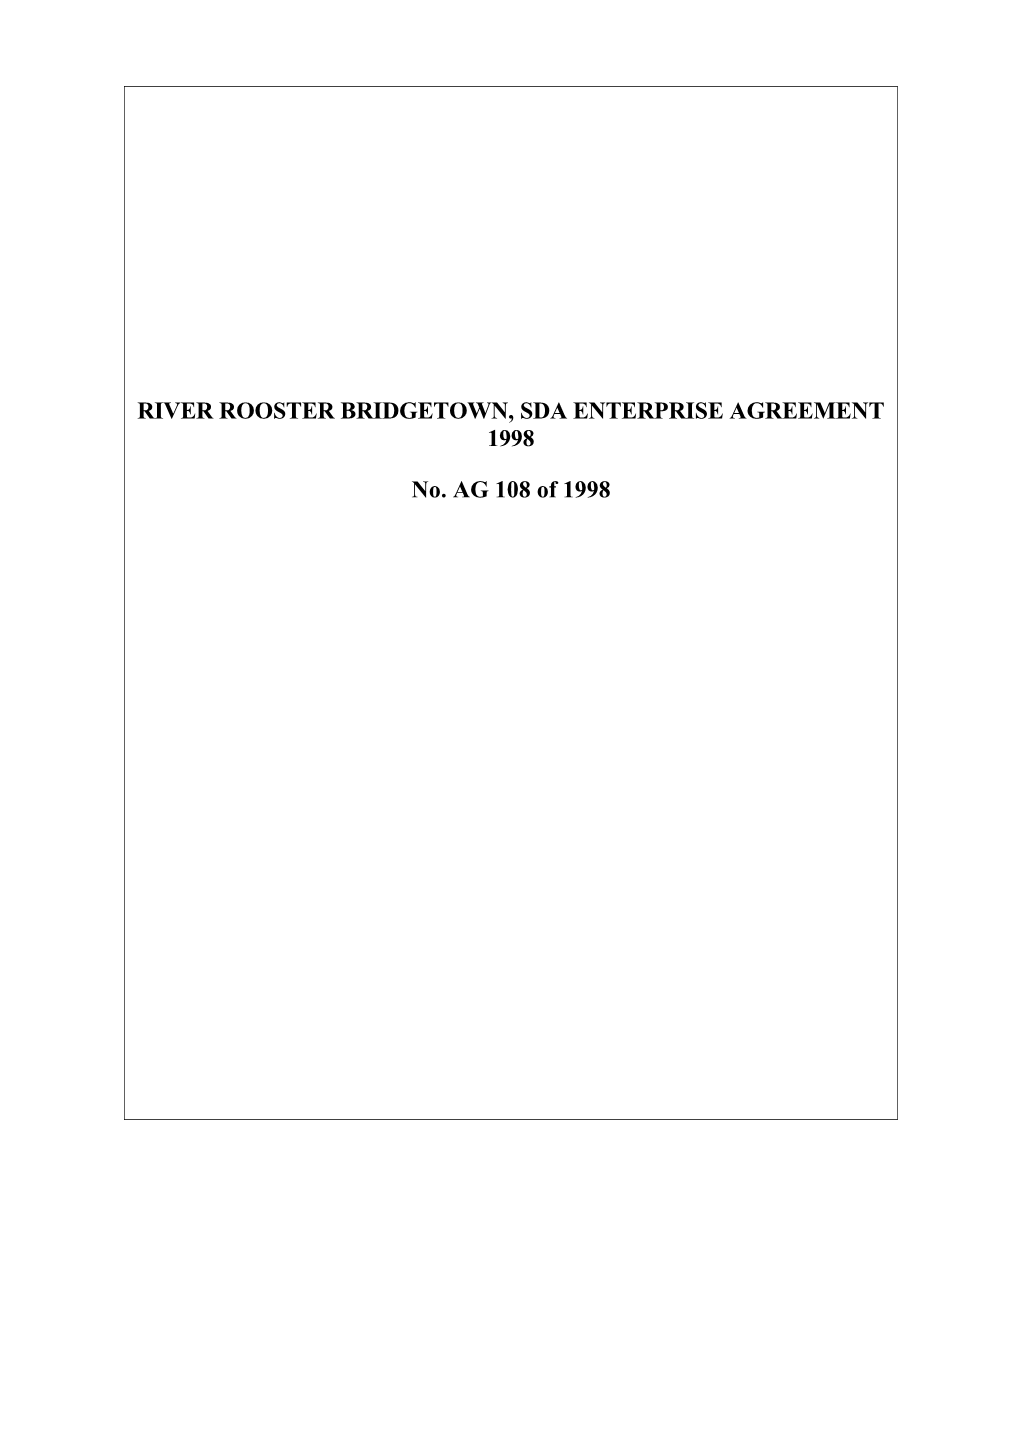 River Rooster Bridgetown, Sda Enterprise Agreement 1998